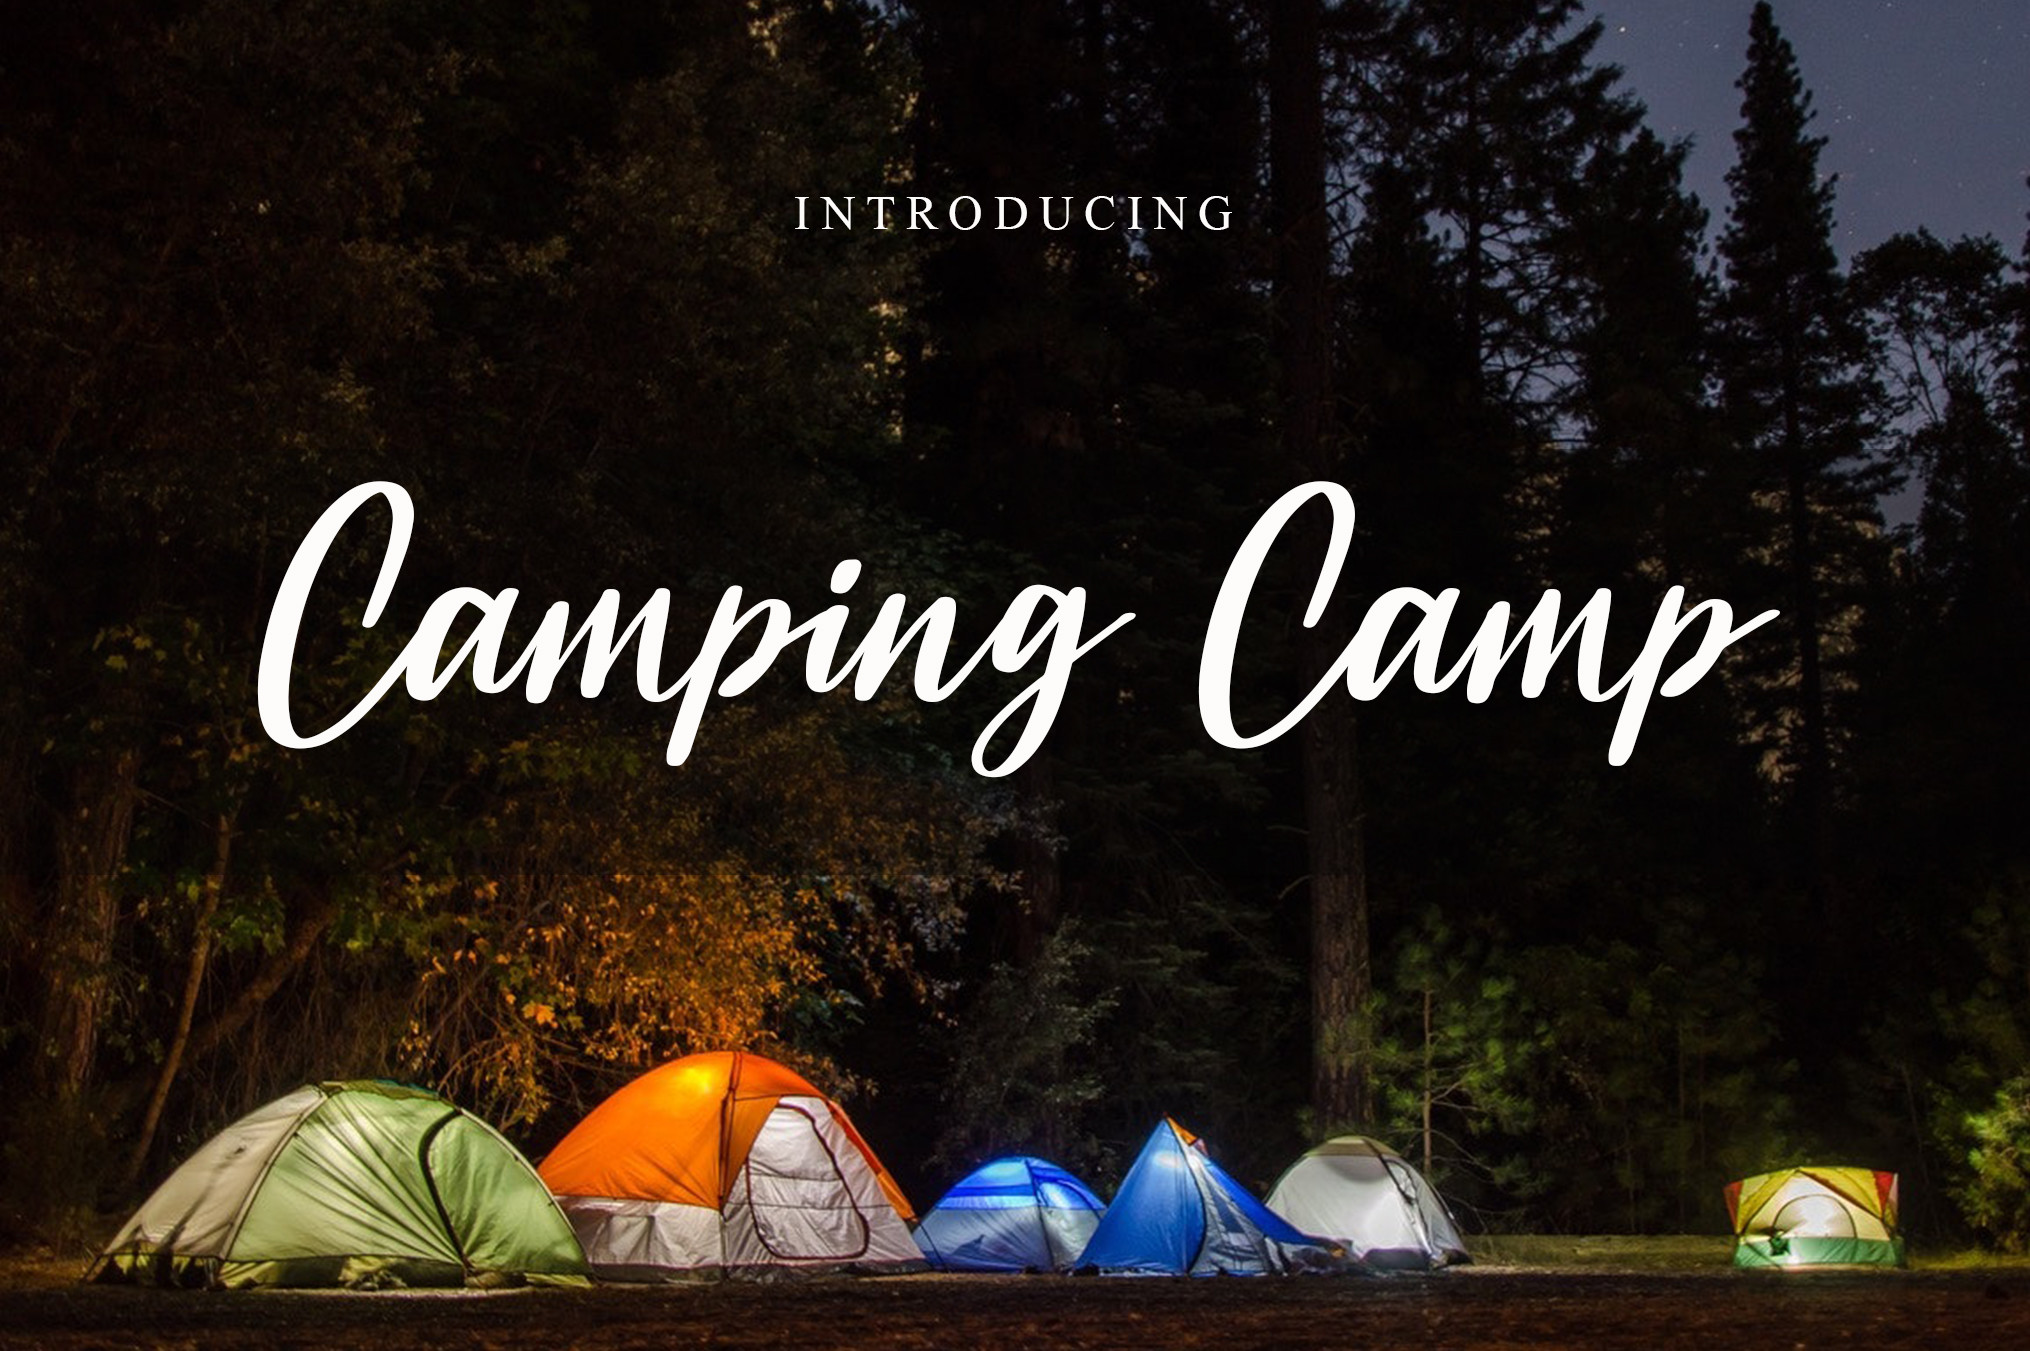 Camping Camp